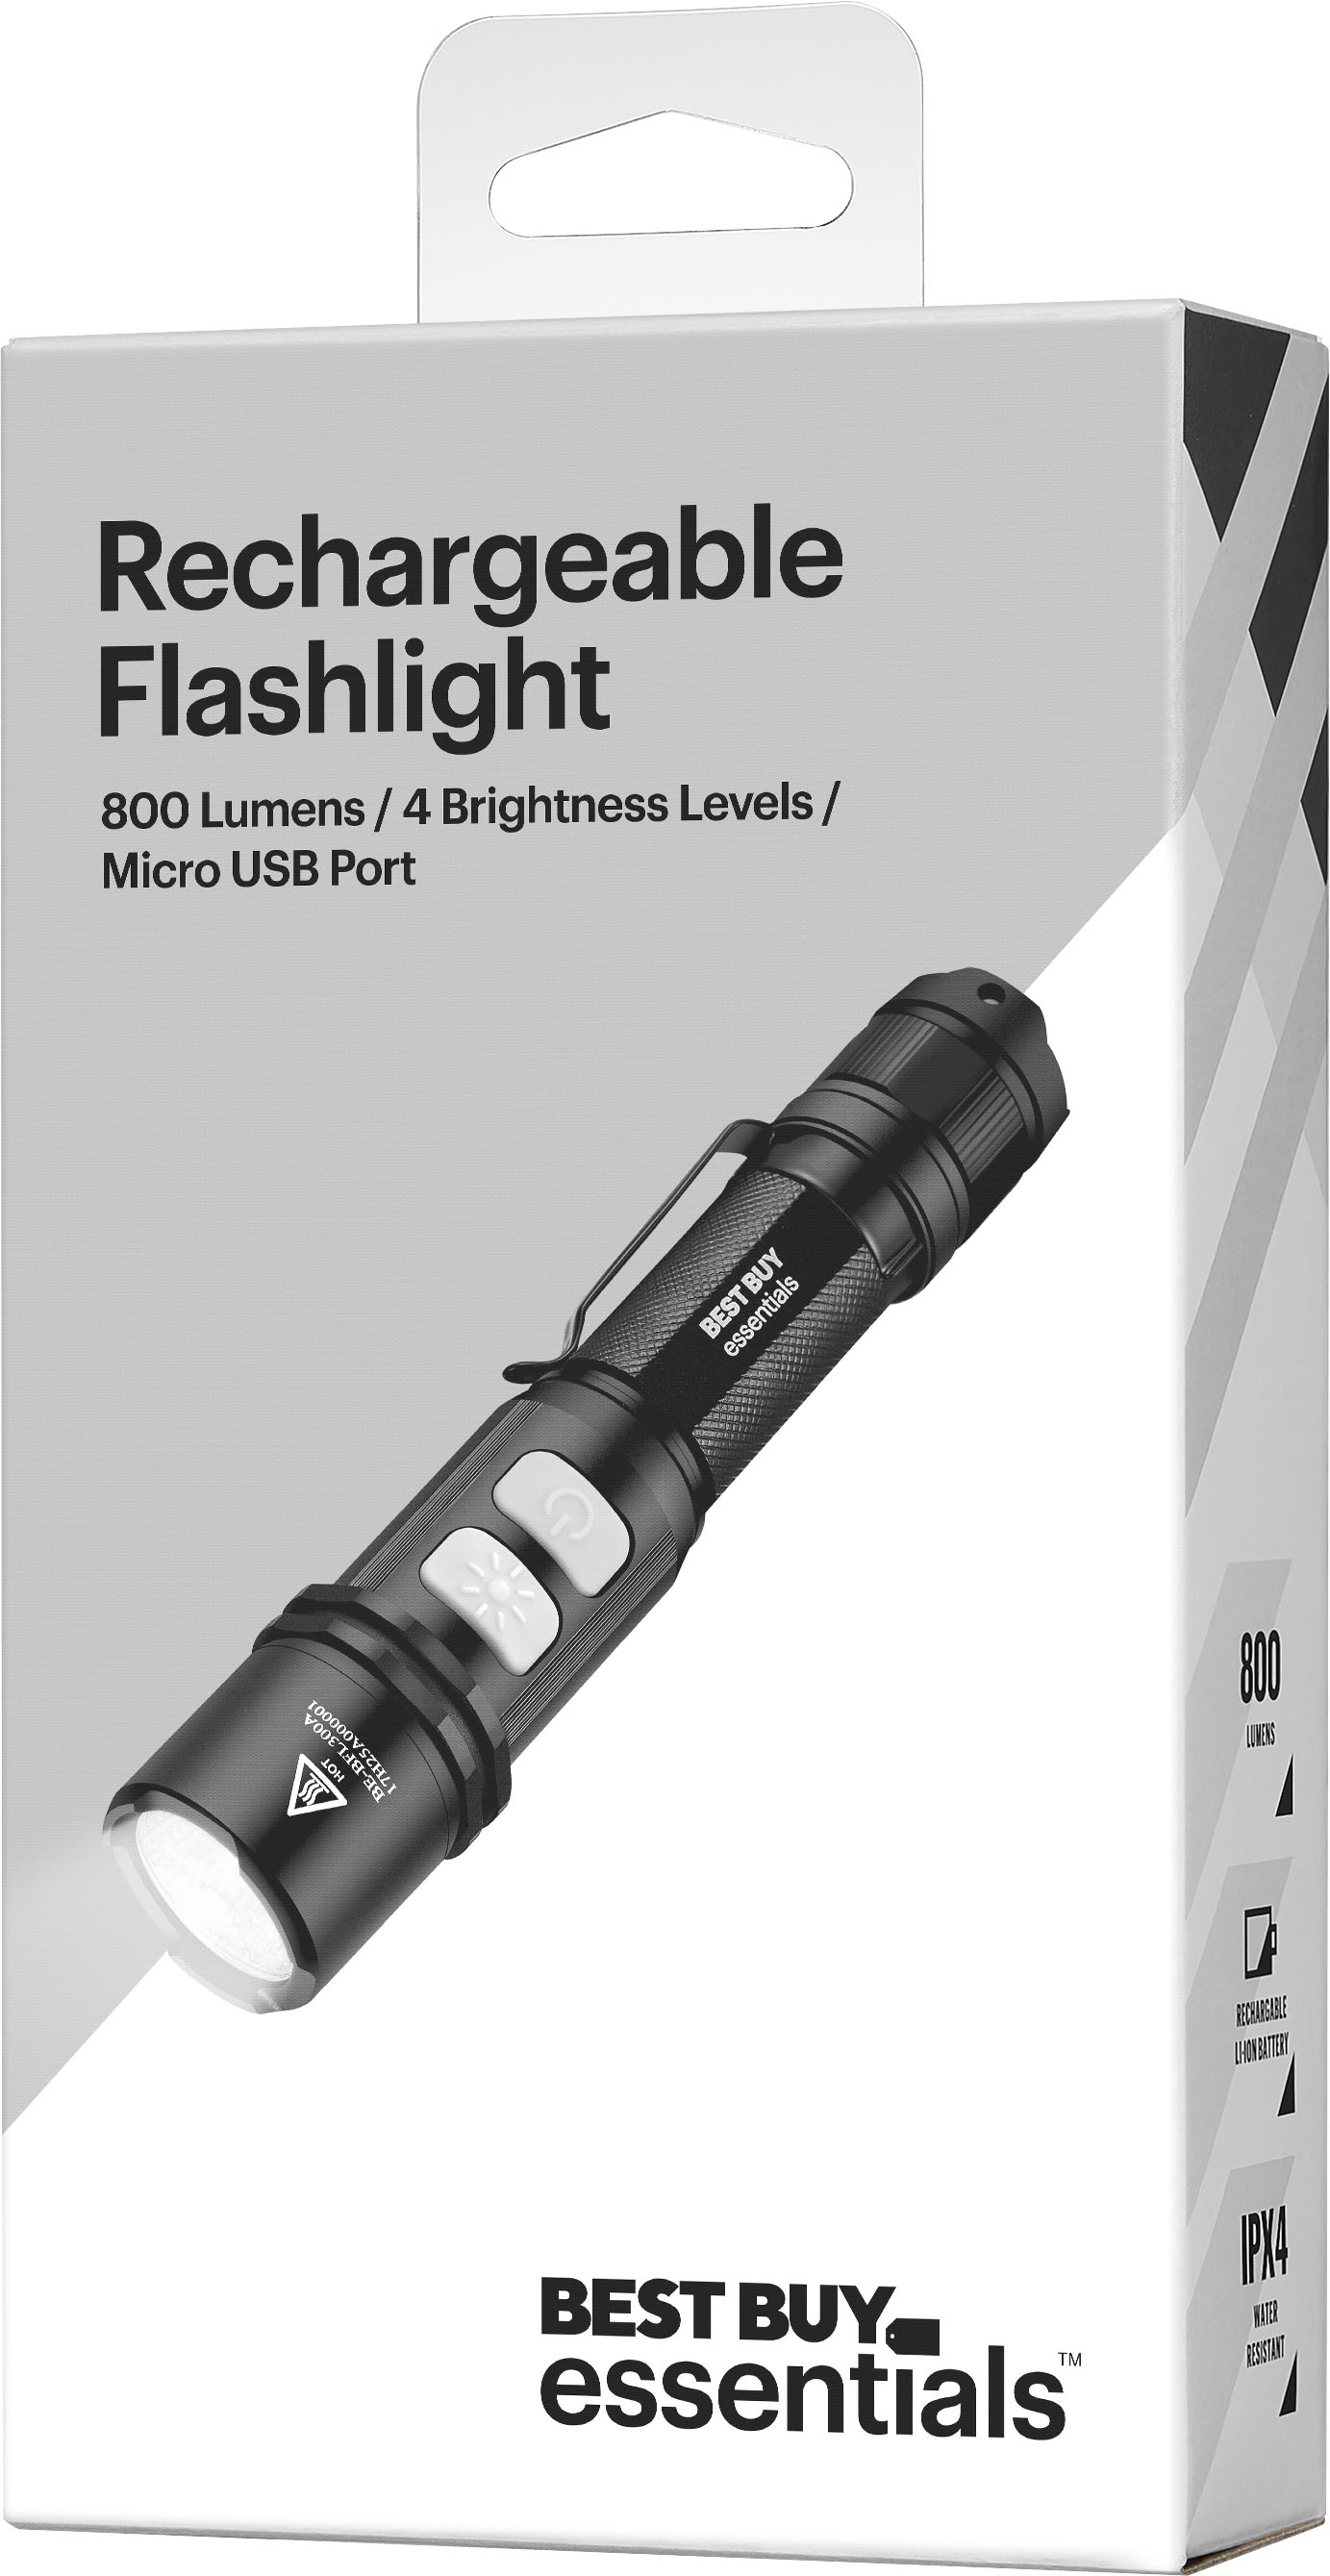 HOTO Flashlight Fit Black QWSDT003 - Best Buy